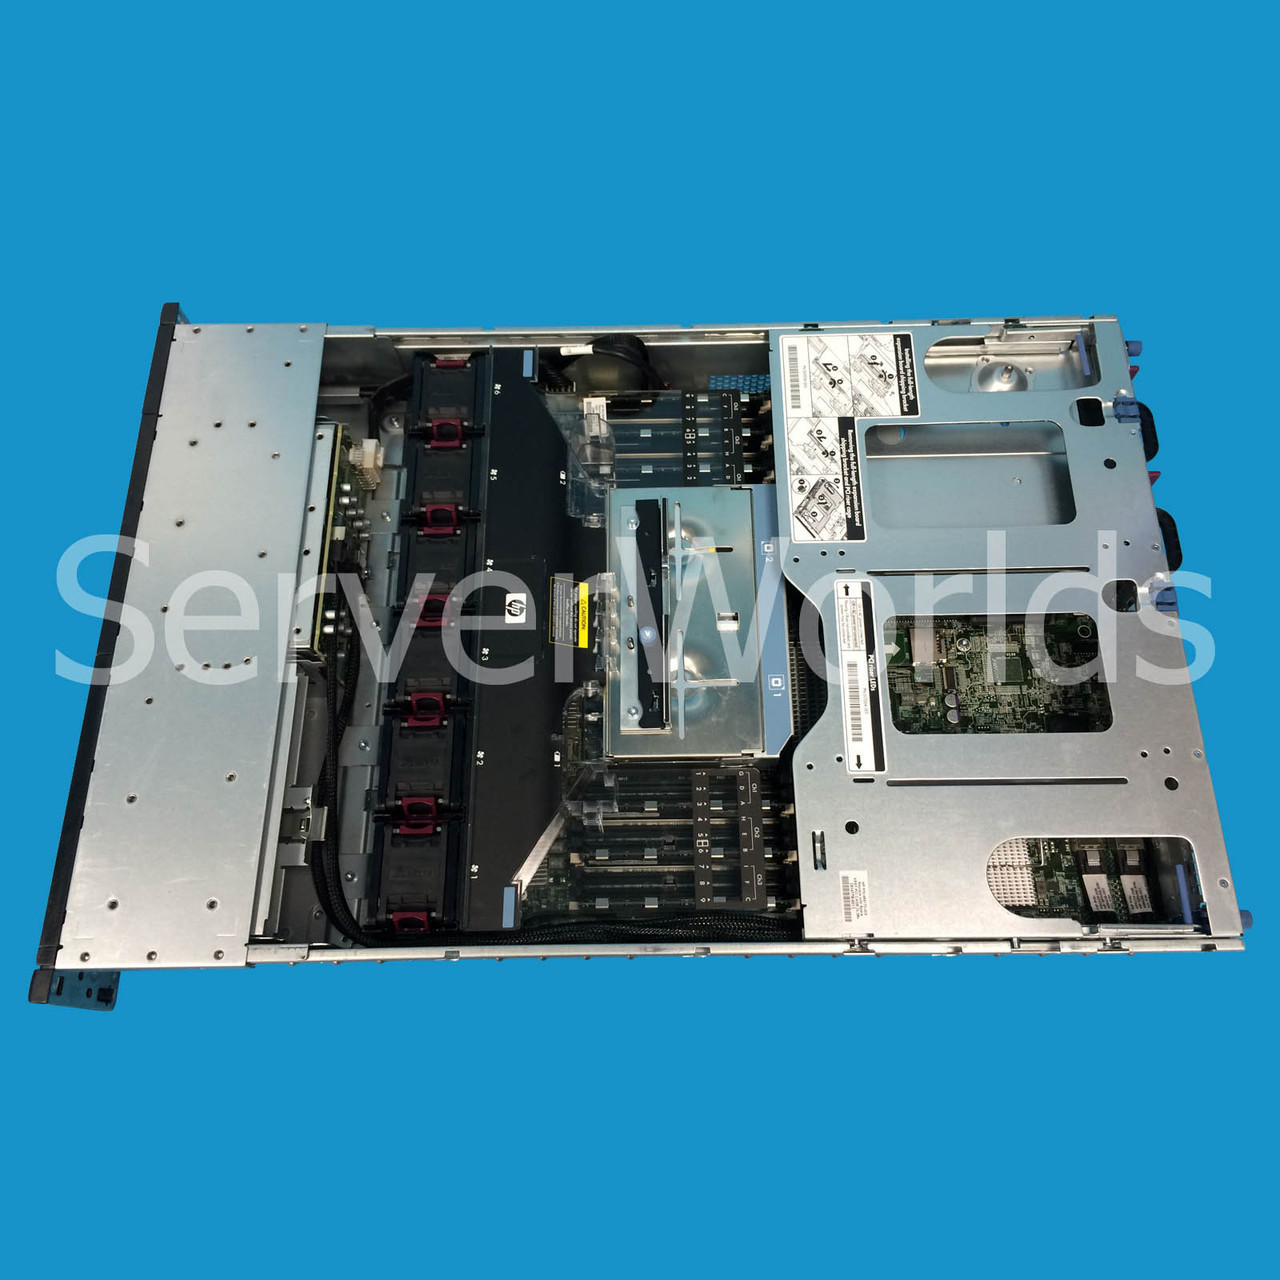 Refurbished HP DL380 G6 SFF, 2 x 6C 2.66Ghz, 64GB, 2 x 128GB SSD, P410